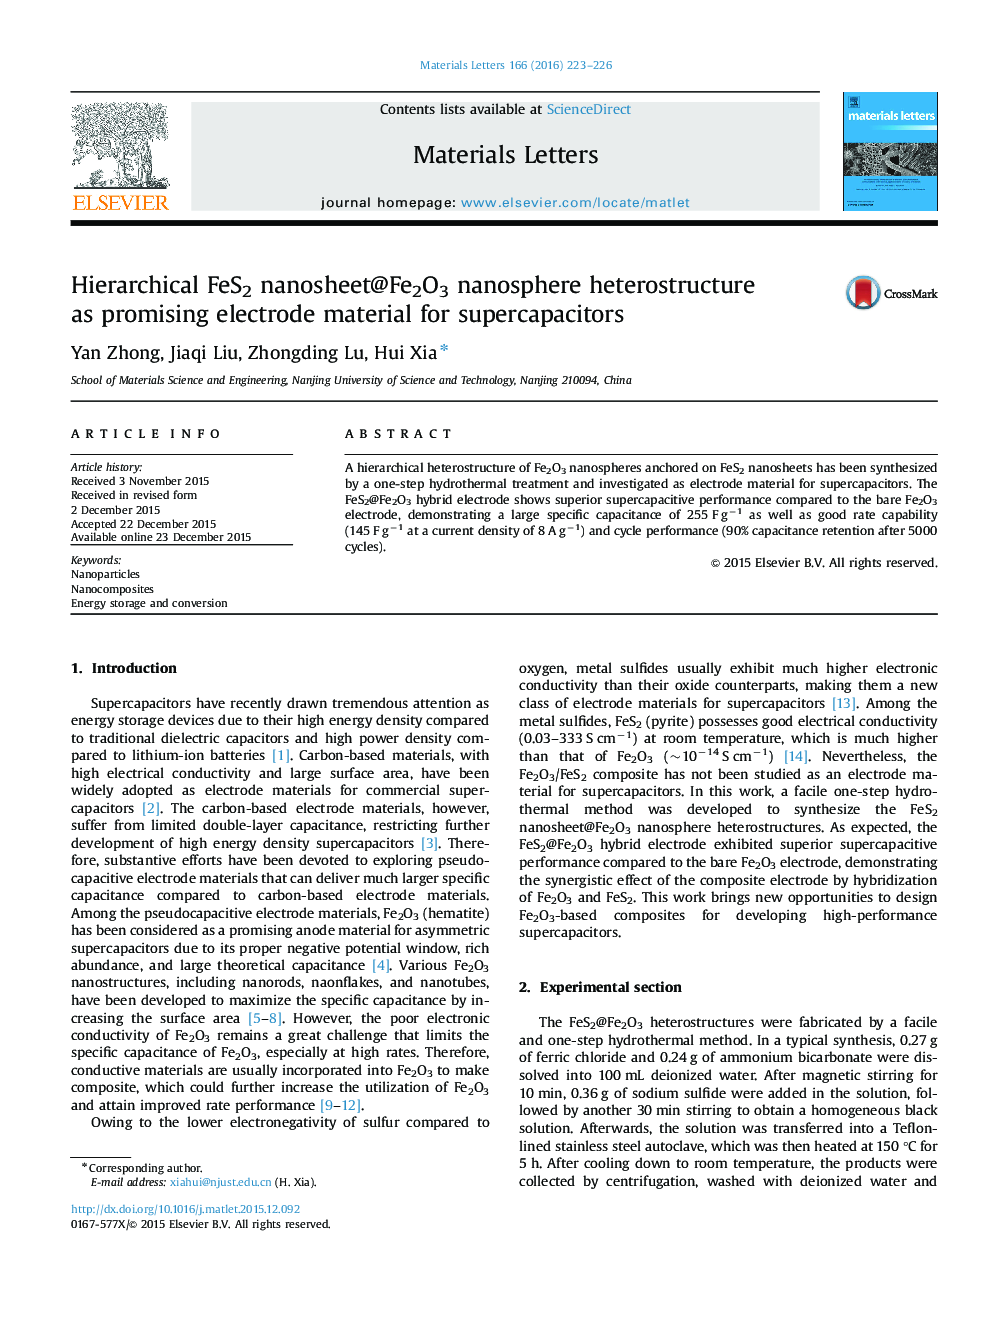 Hierarchical FeS2 nanosheet@Fe2O3 nanosphere heterostructure as promising electrode material for supercapacitors